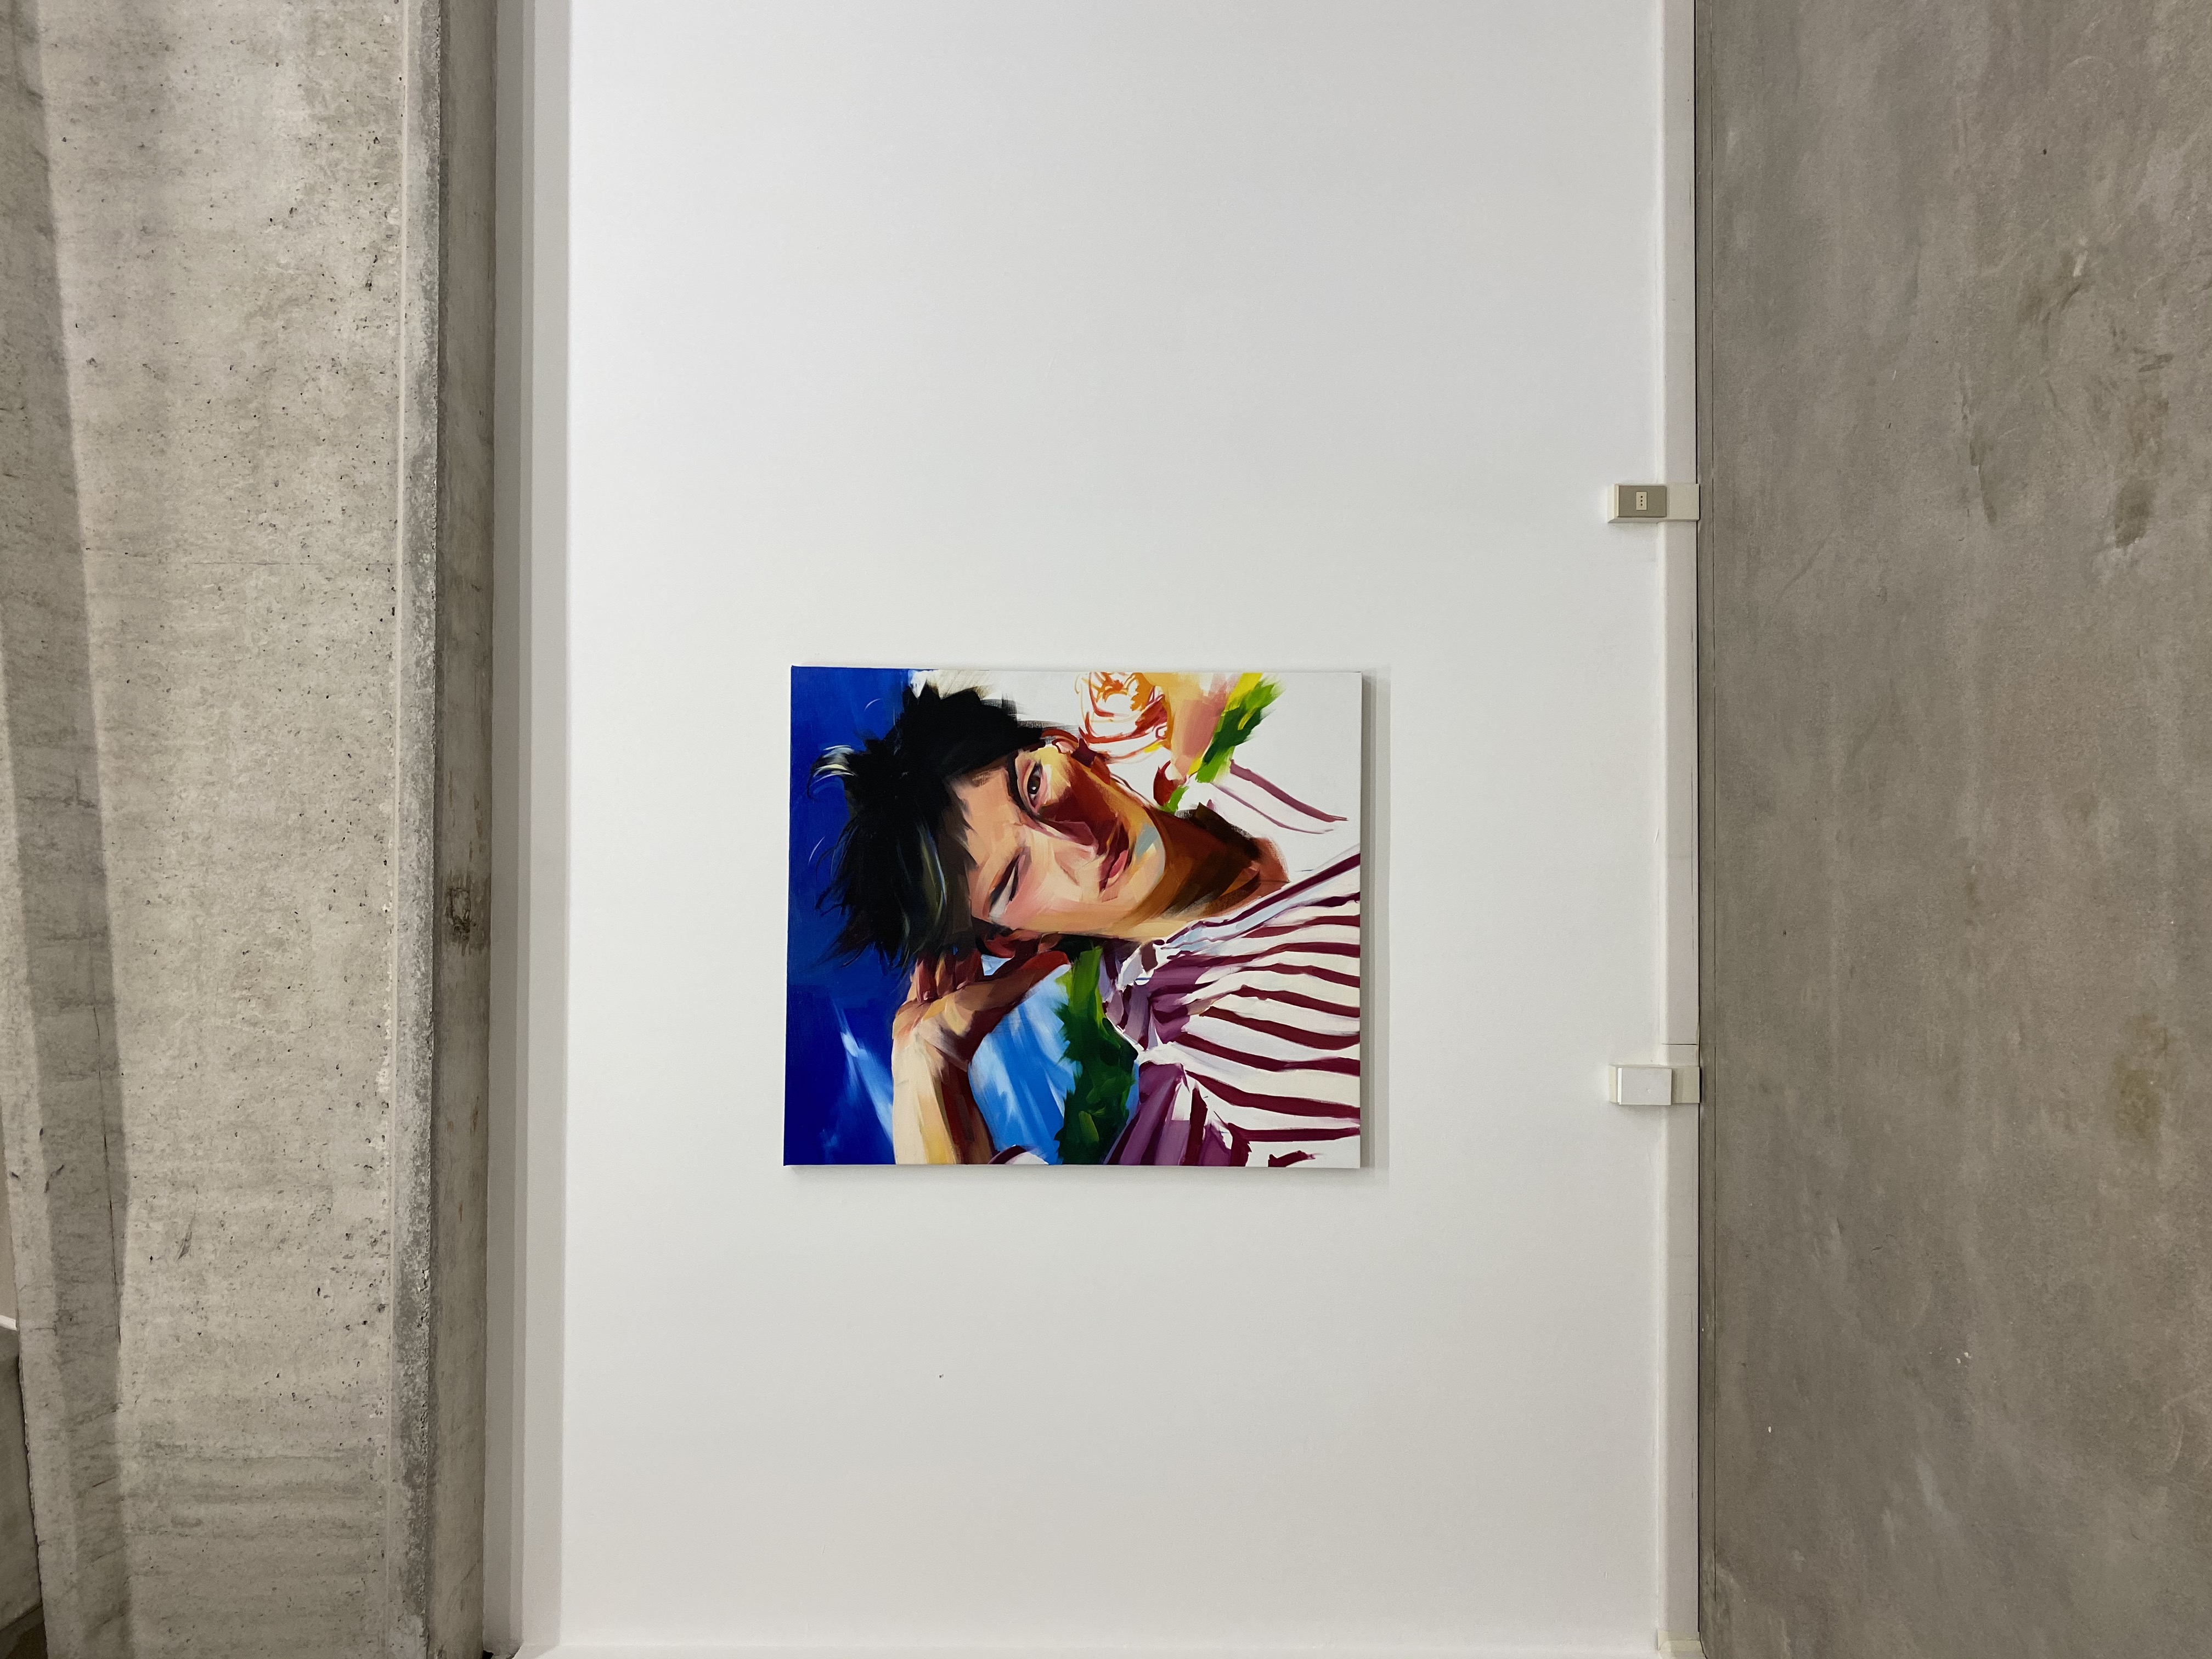 Exhibition view, Andrea Fontanari. Knock before entering, solo show. Boccanera Gallery, Trento